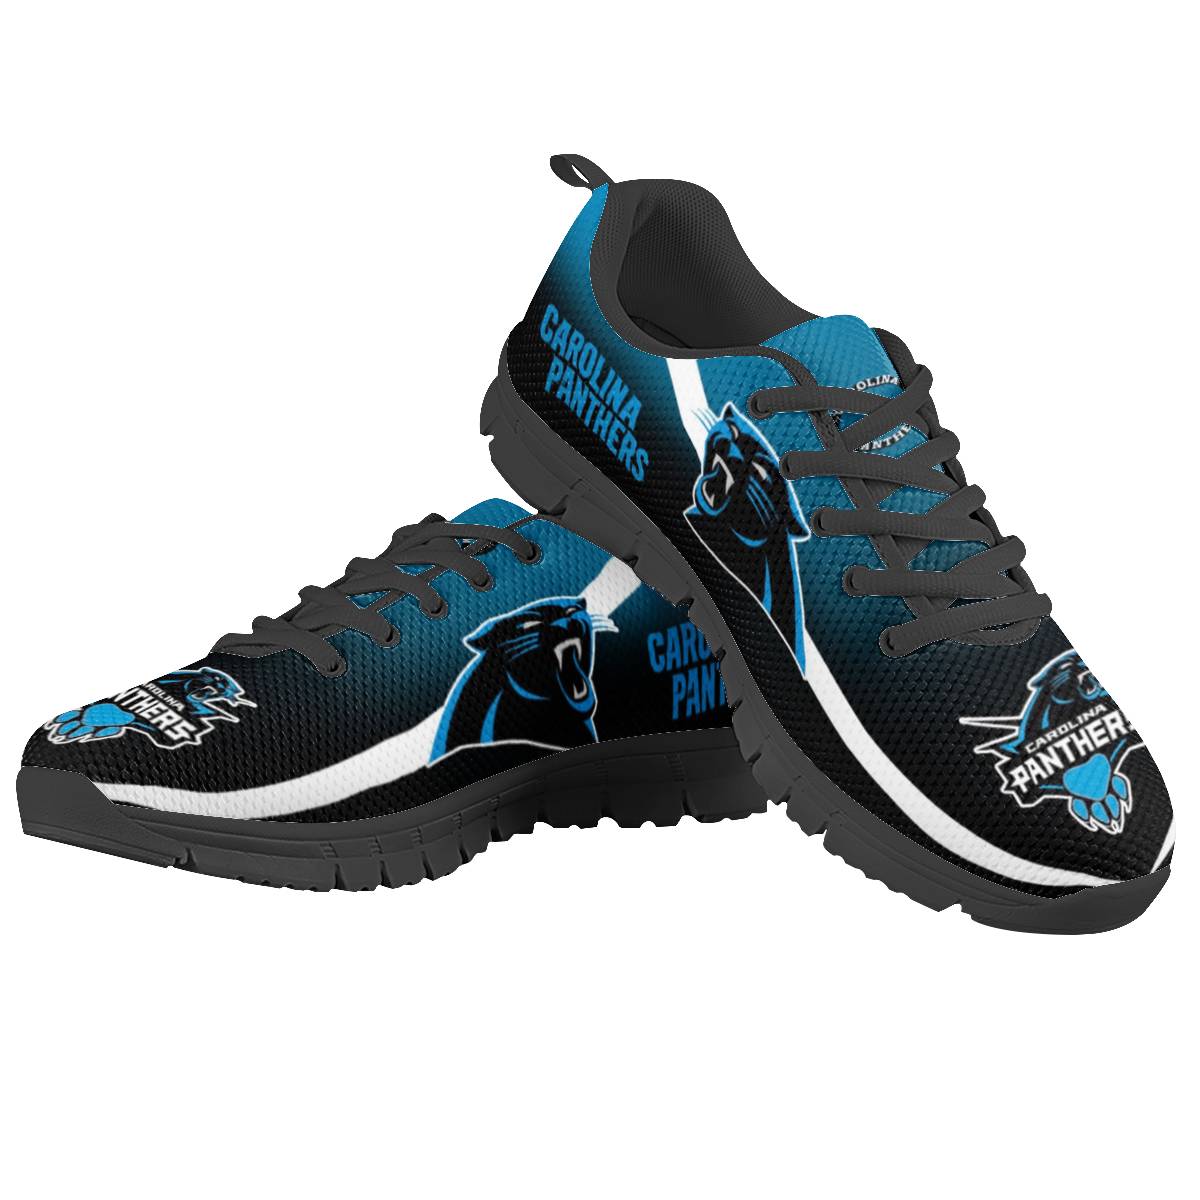 Women's Carolina Panthers AQ Running Shoes 001